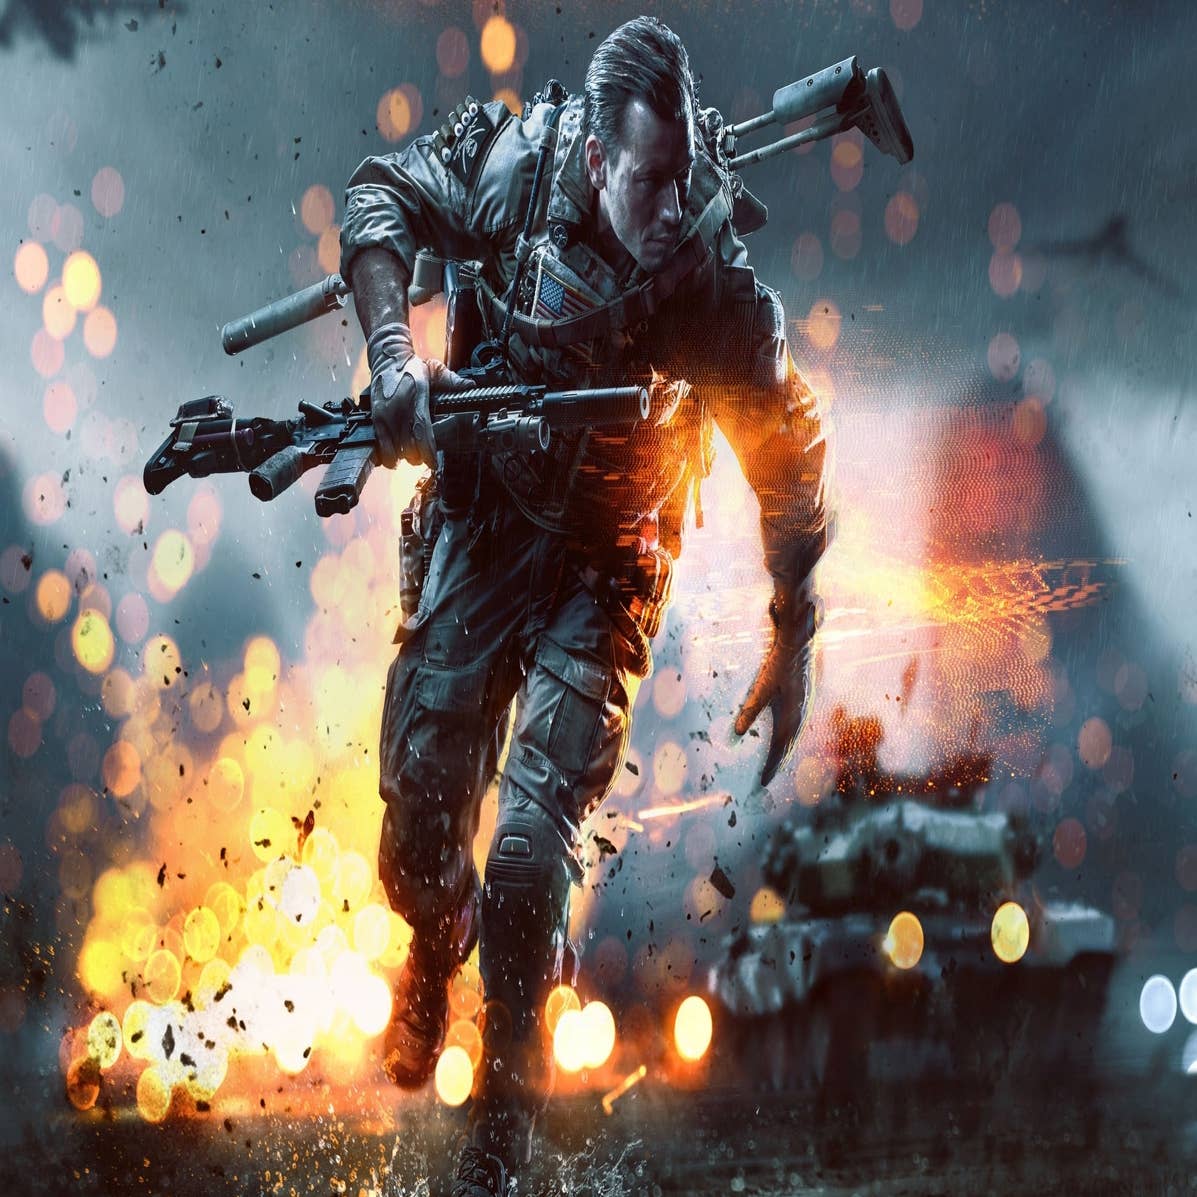 Battlefield 4: PS3 vs. PS4 Campaign Graphics Comparison 